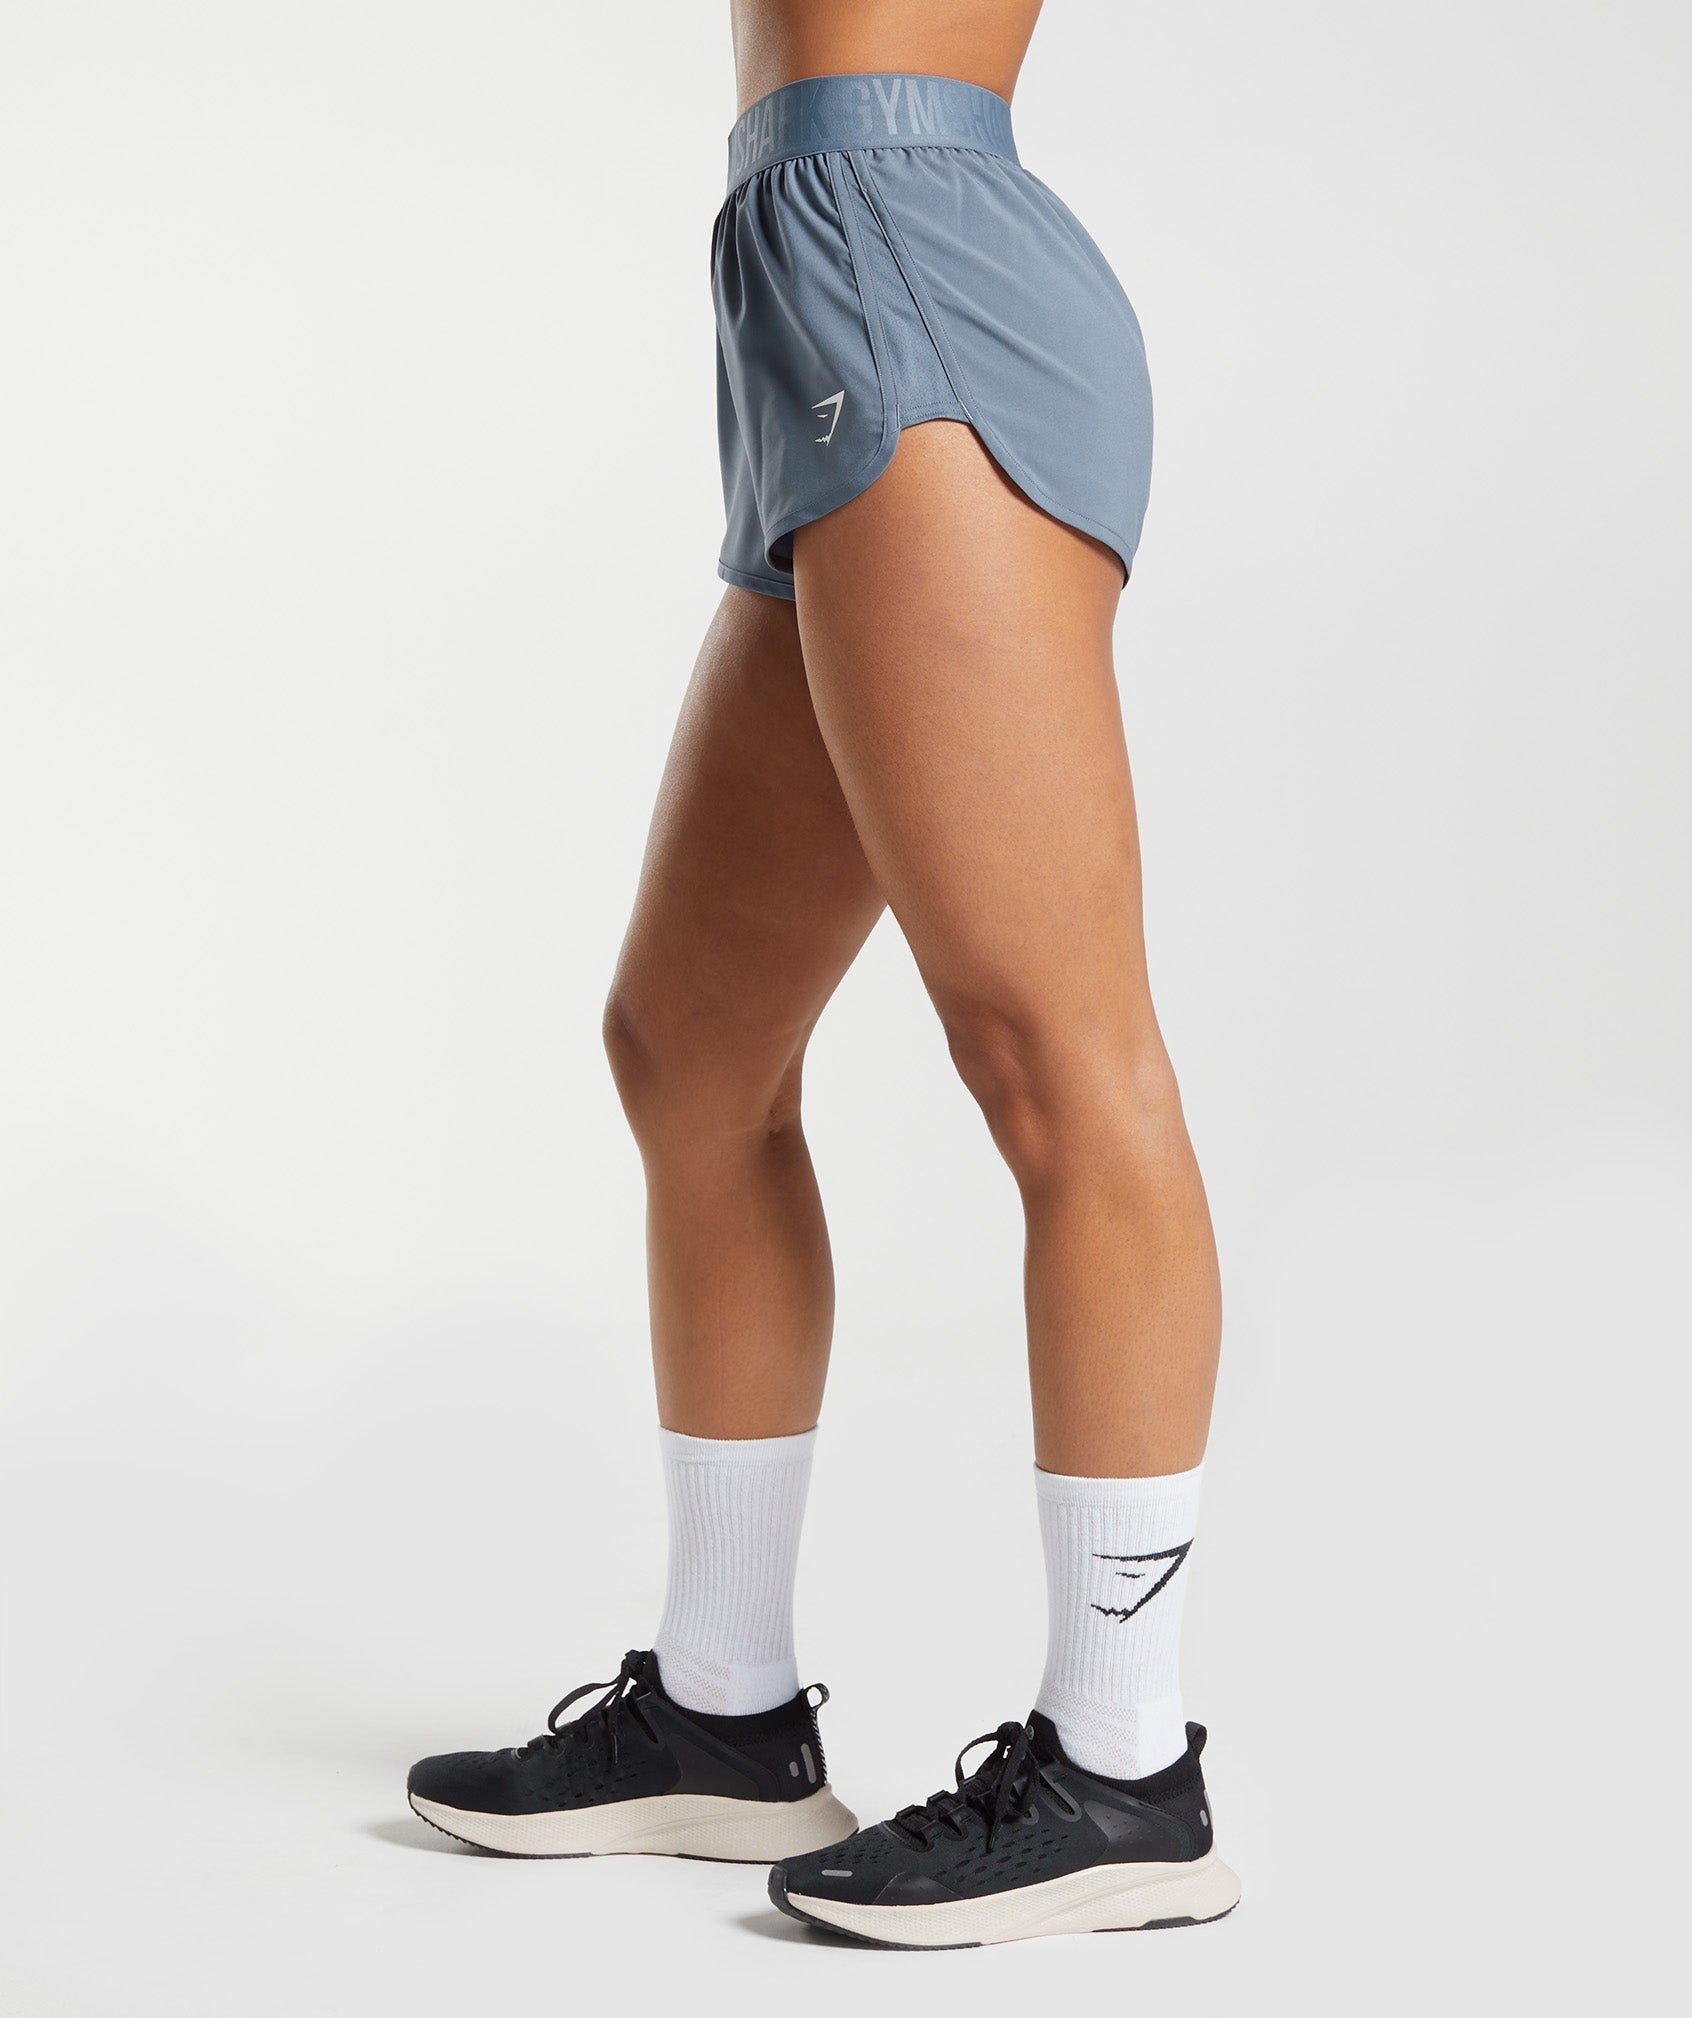 Gymshark Womens Training Loose Fit Shorts Thick Band Papaya Orange Size  Medium (Retail $30) - Dutch Goat